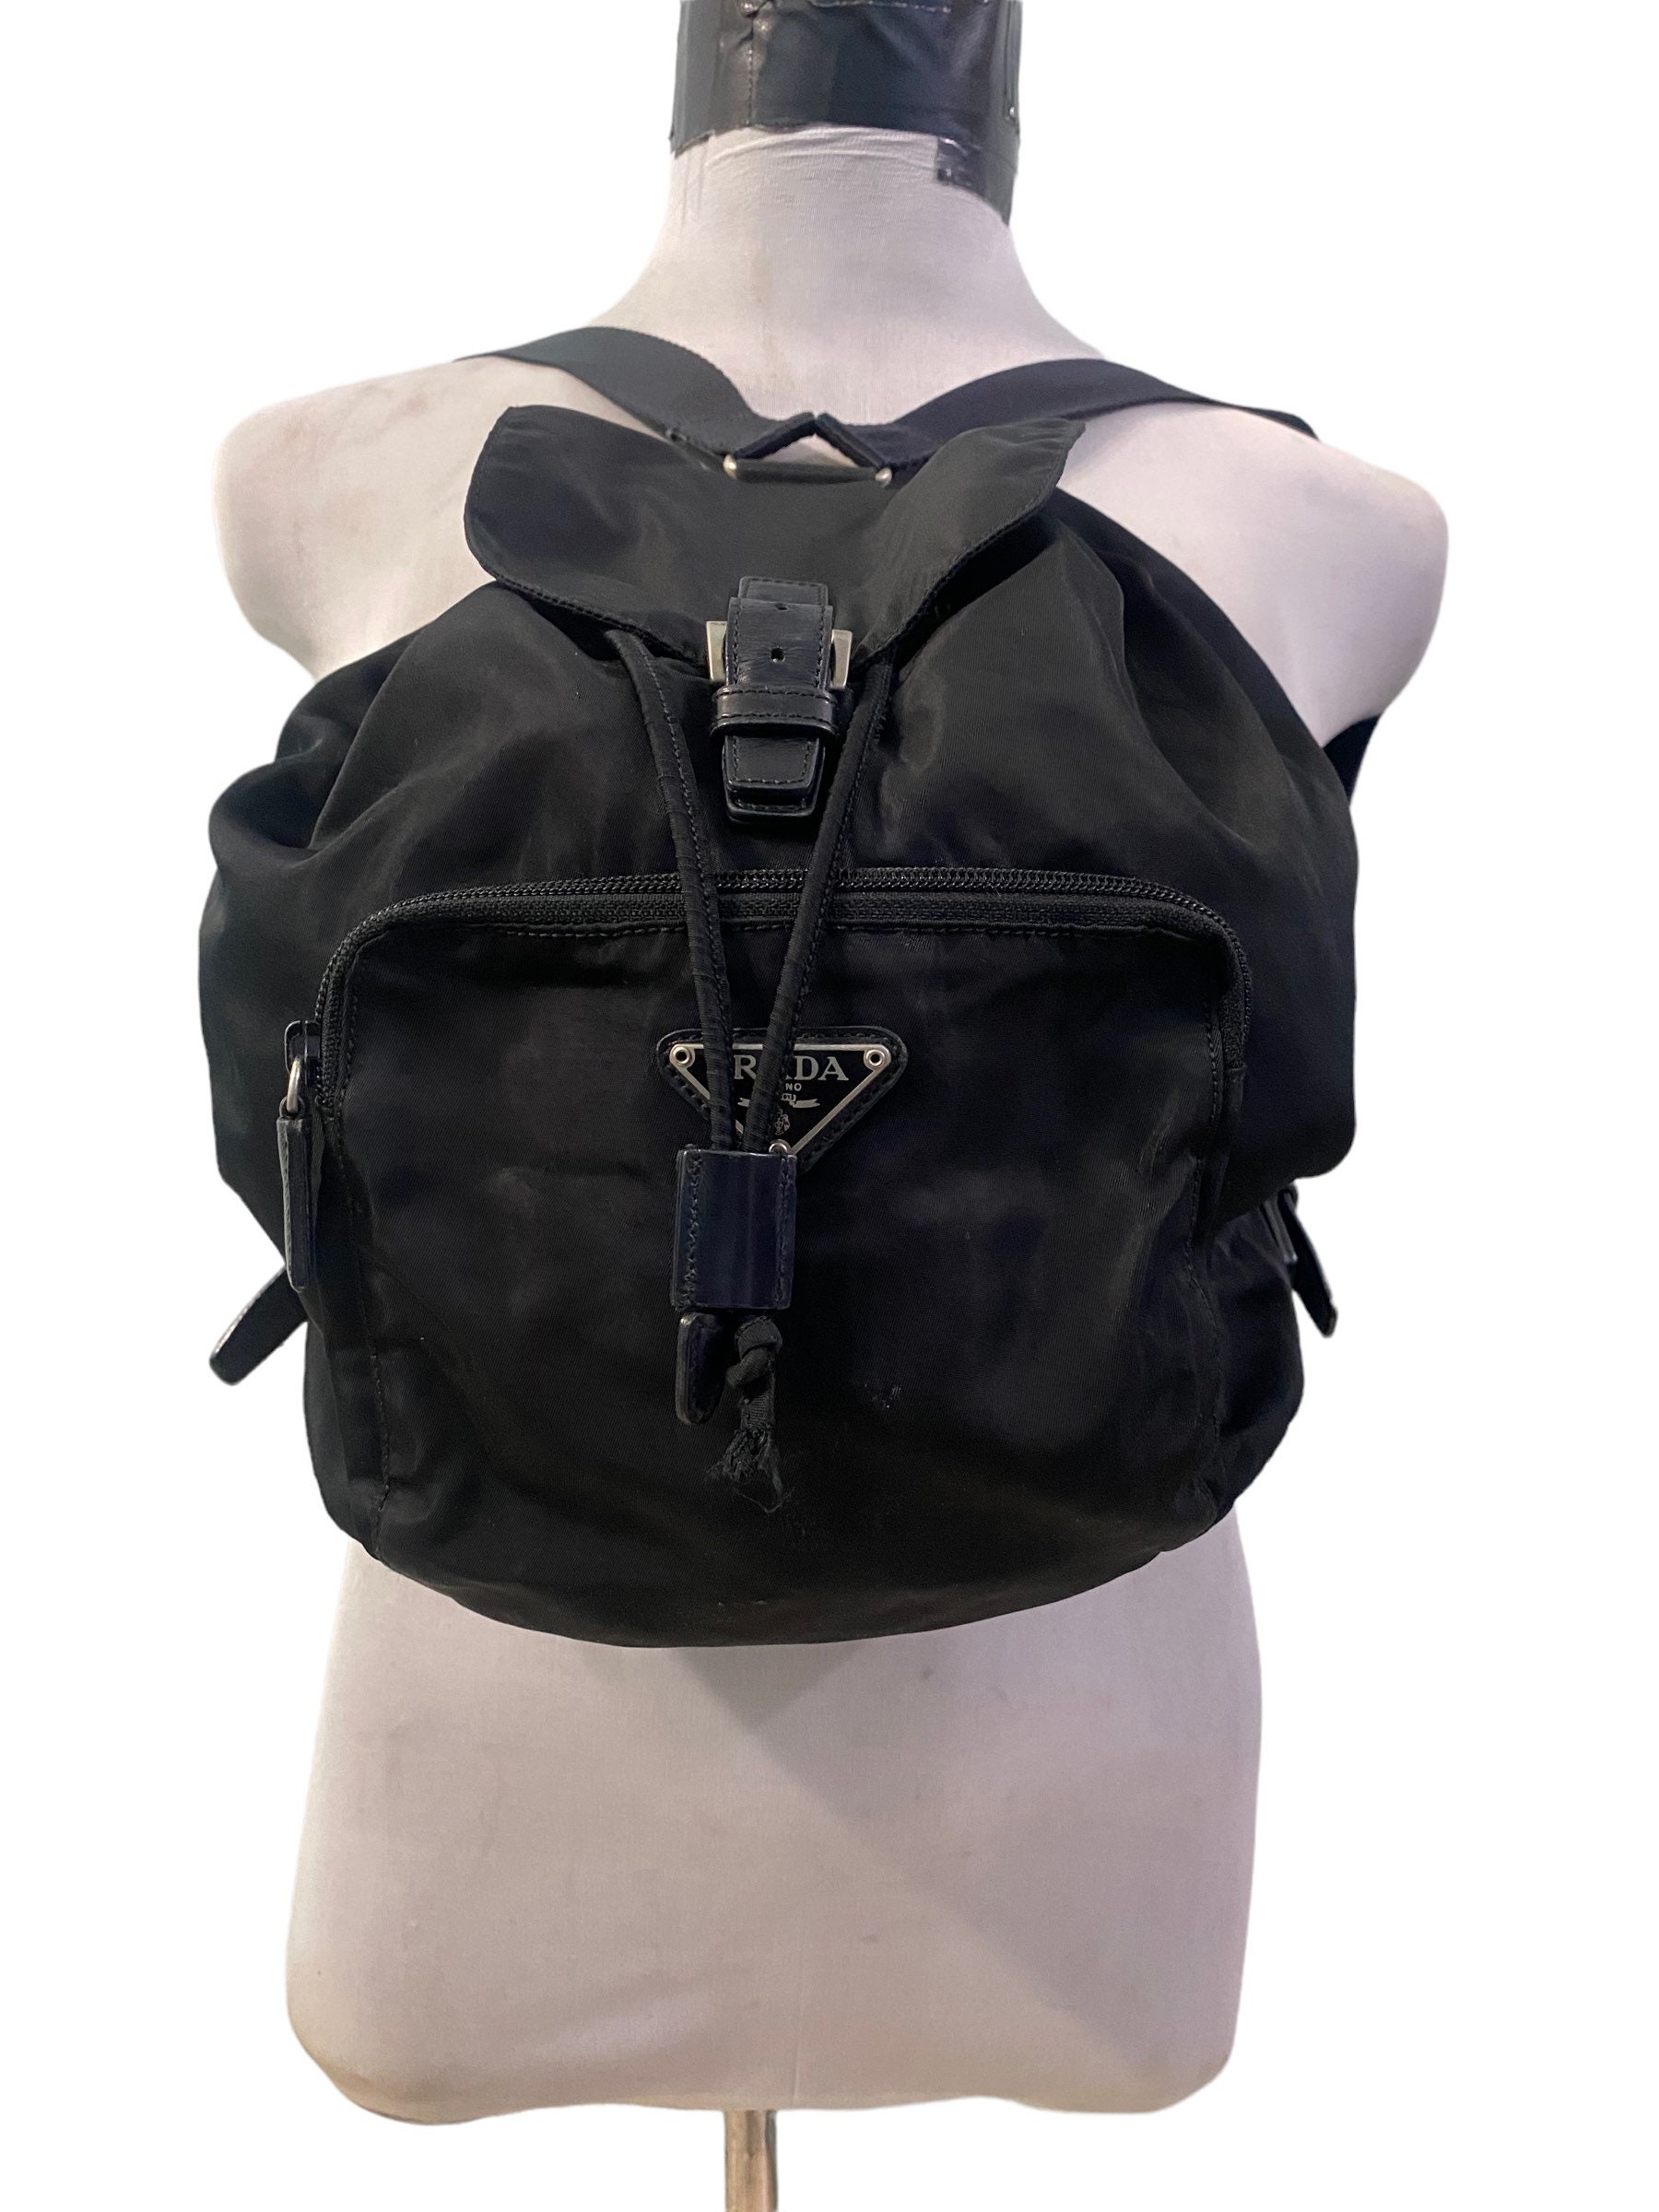 Buy Prada Backpack Online In India - Etsy India